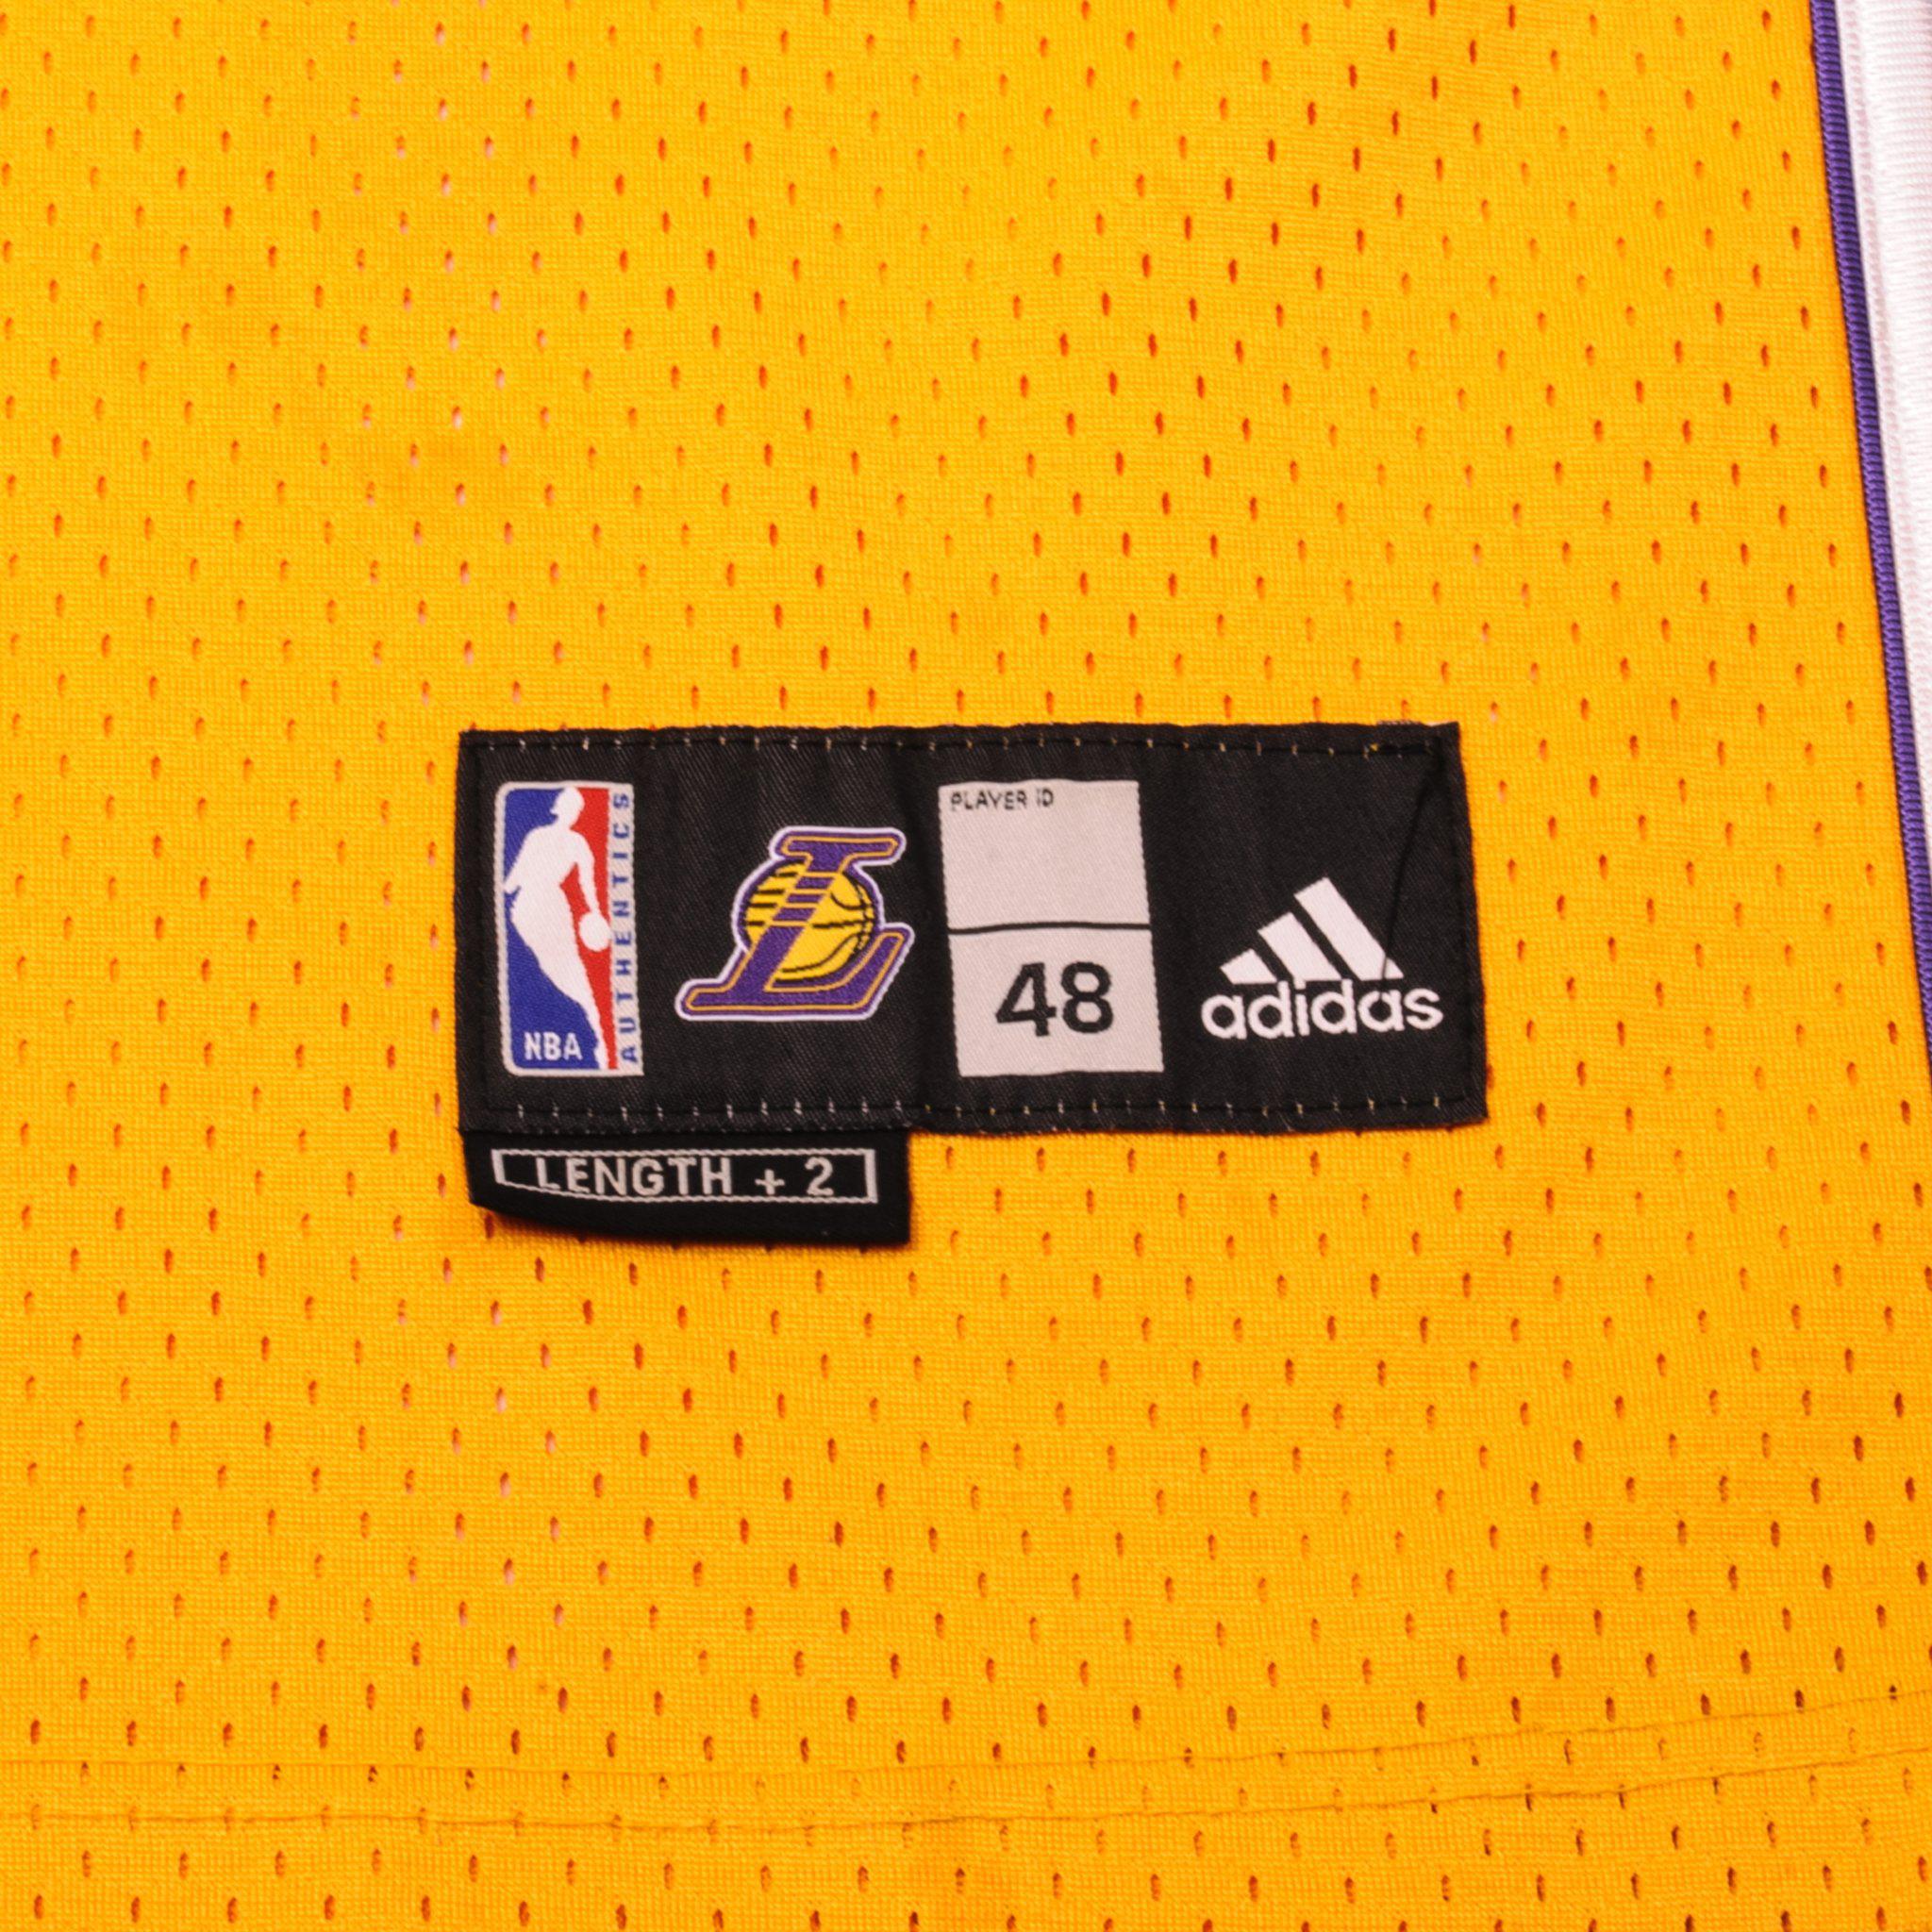 Adidas Snakeskin Lakers Kobe Bryant Jersey Size Medium